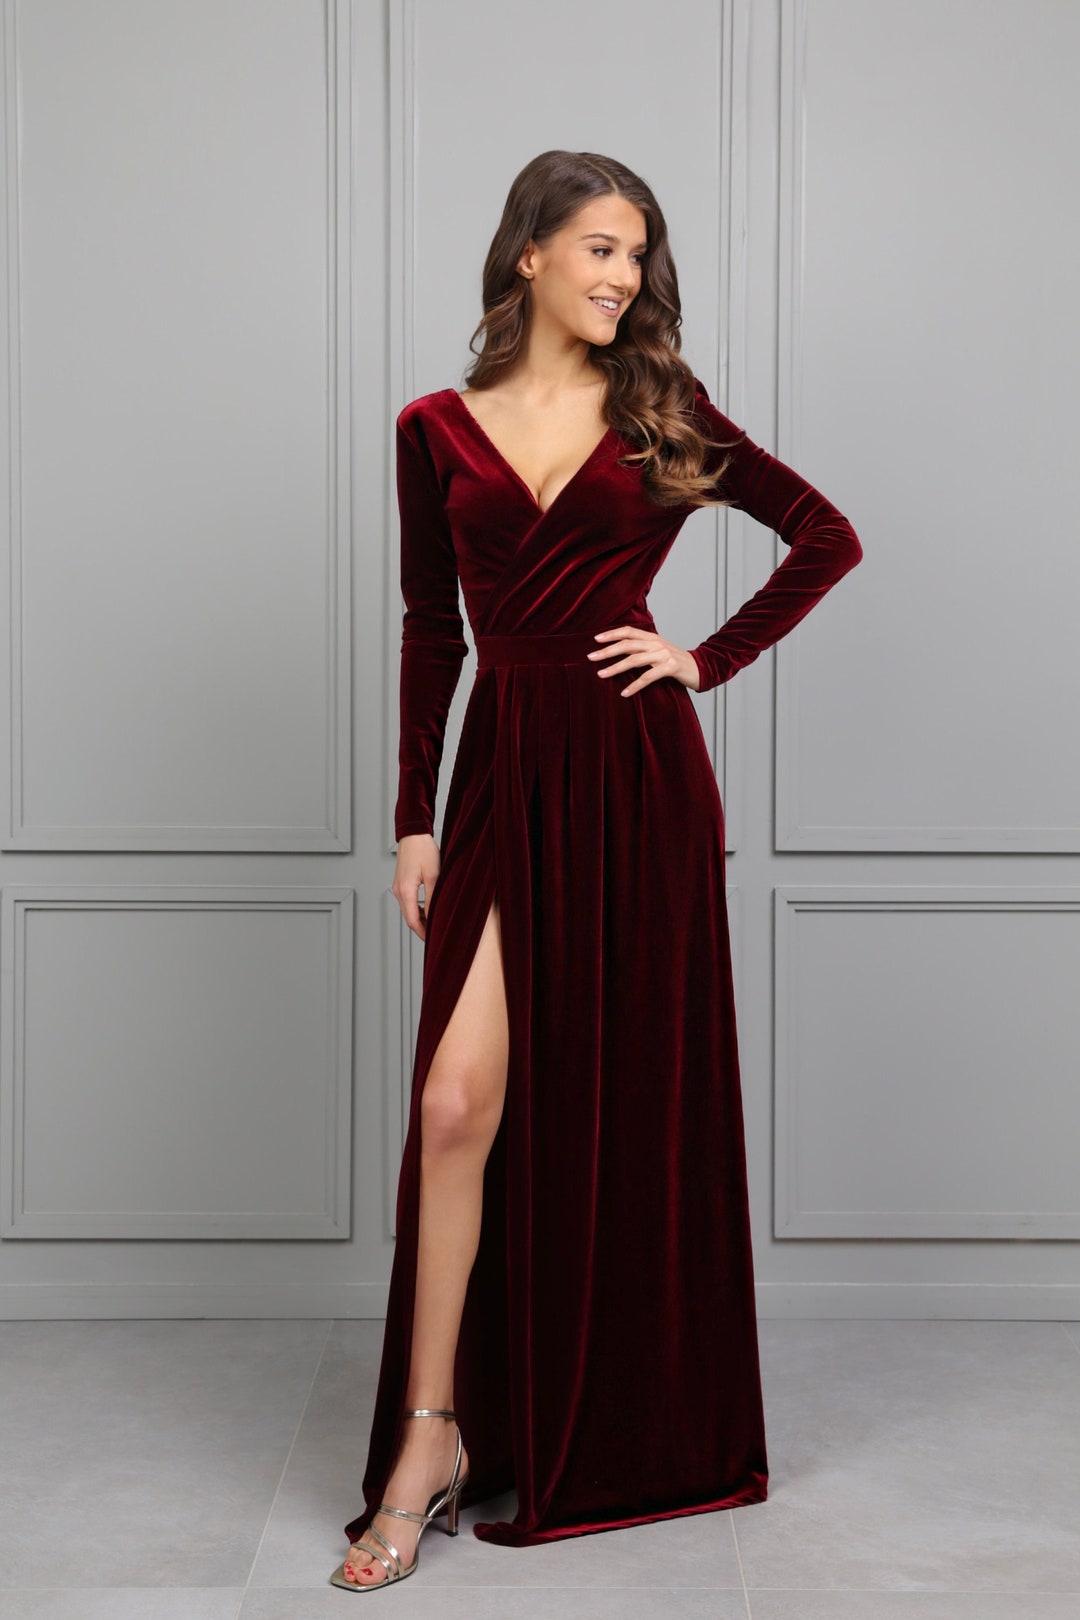 Gown : Maroon Velvet heavy embroidered designer wedding gown